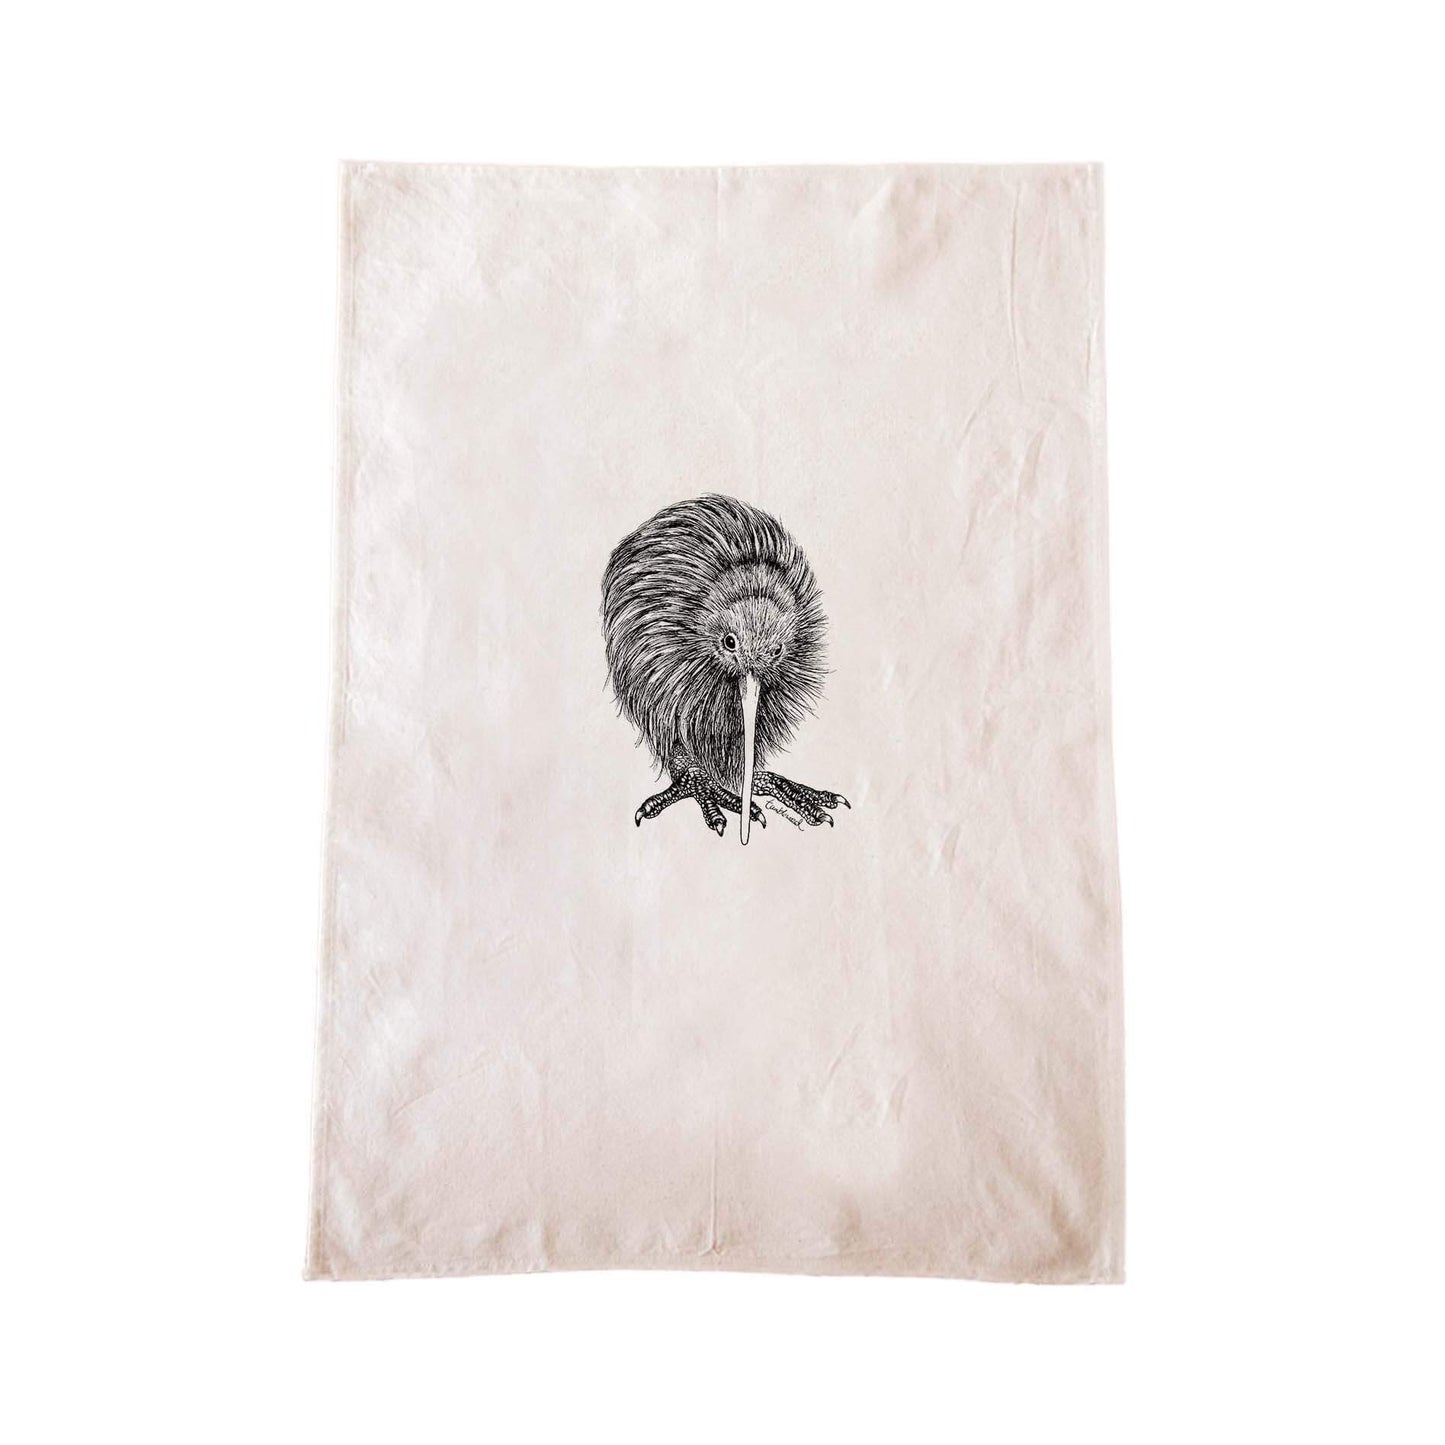 Off-white cotton tea towel with a screen printed Kiwi design.